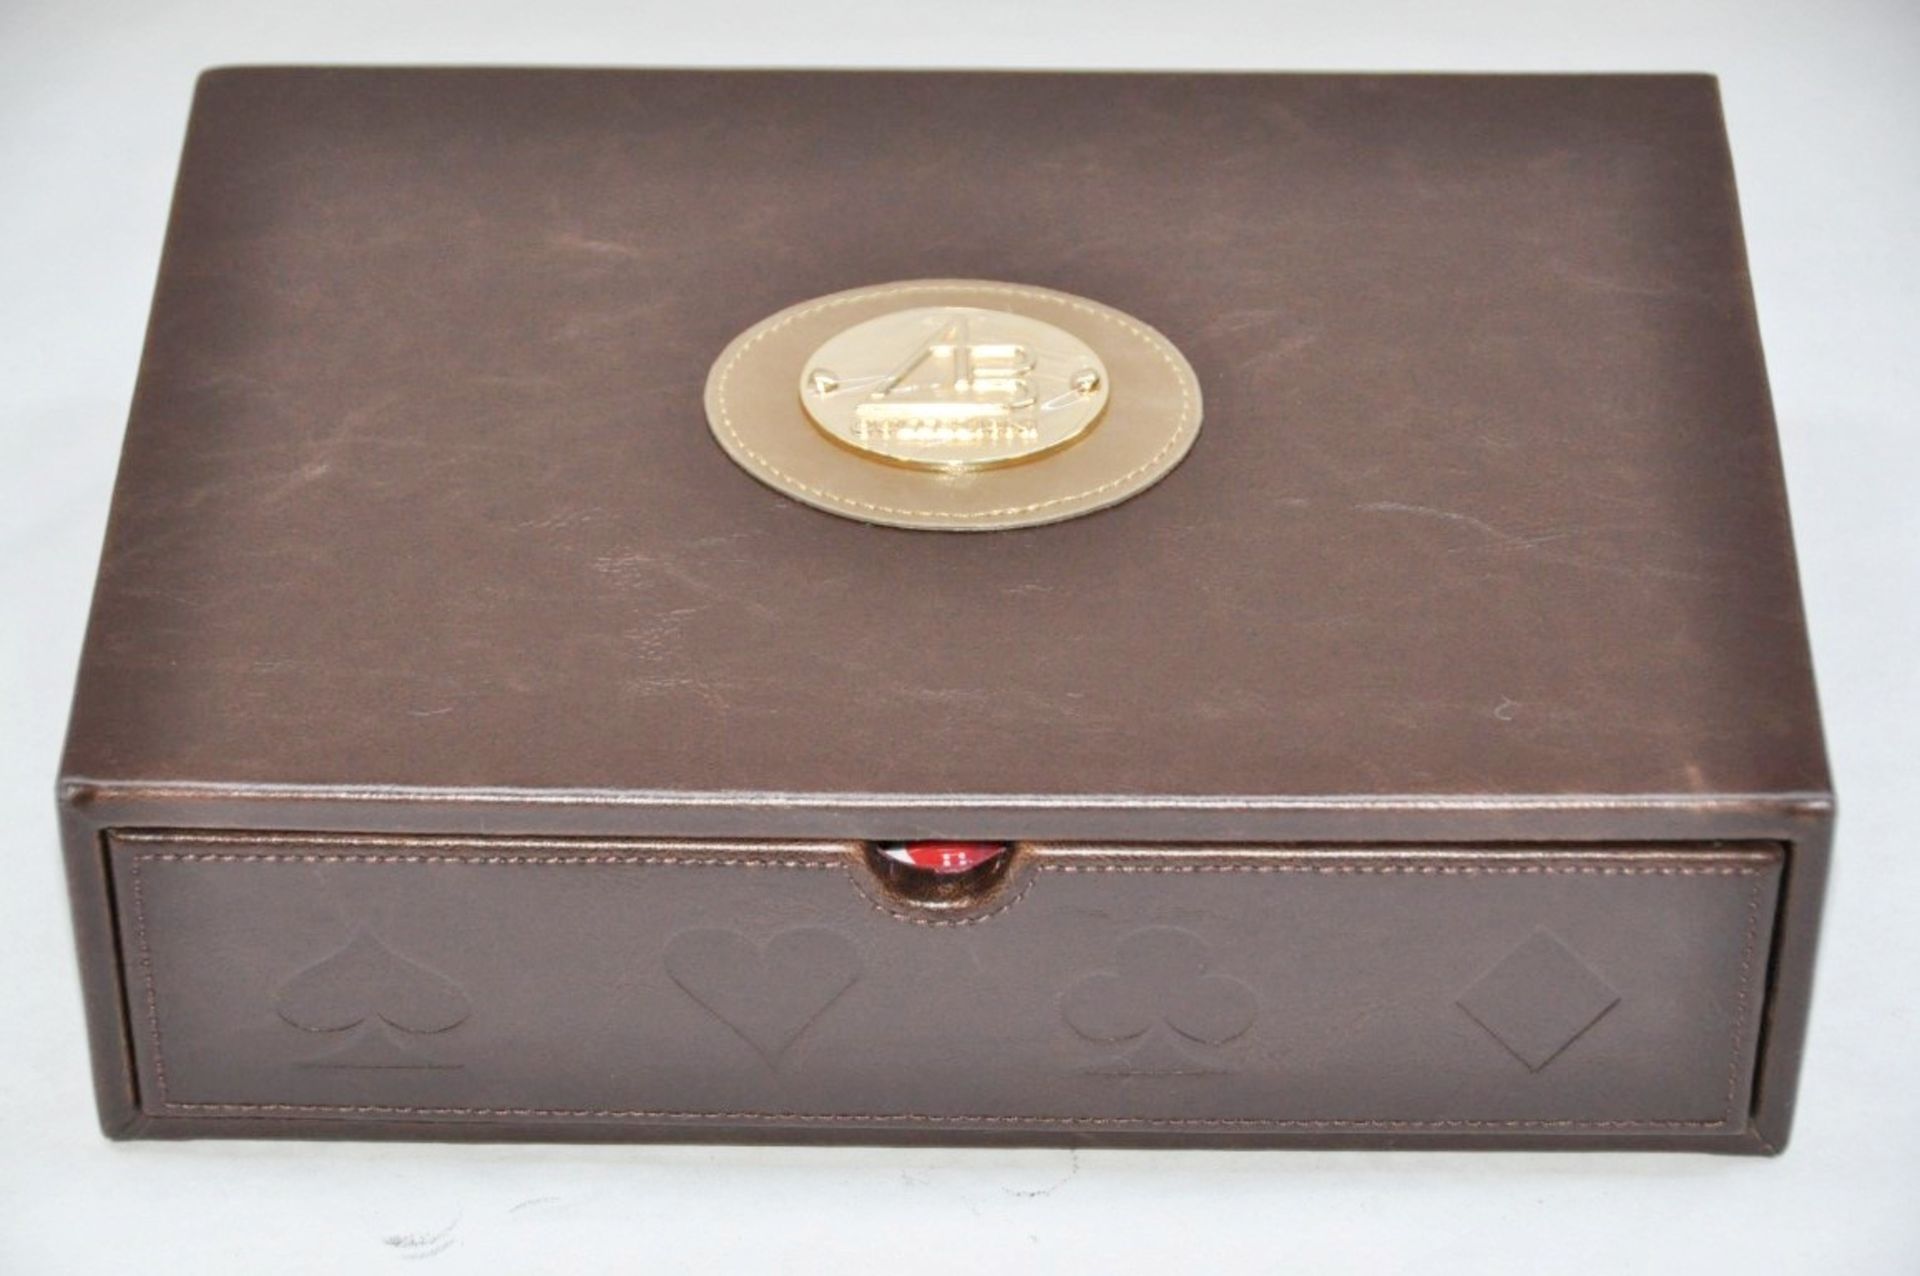 1 x "AB Collezioni" Italian Genuine Leather-Bound Luxury POKER SET (34048) - Features Beautiful - Image 3 of 8